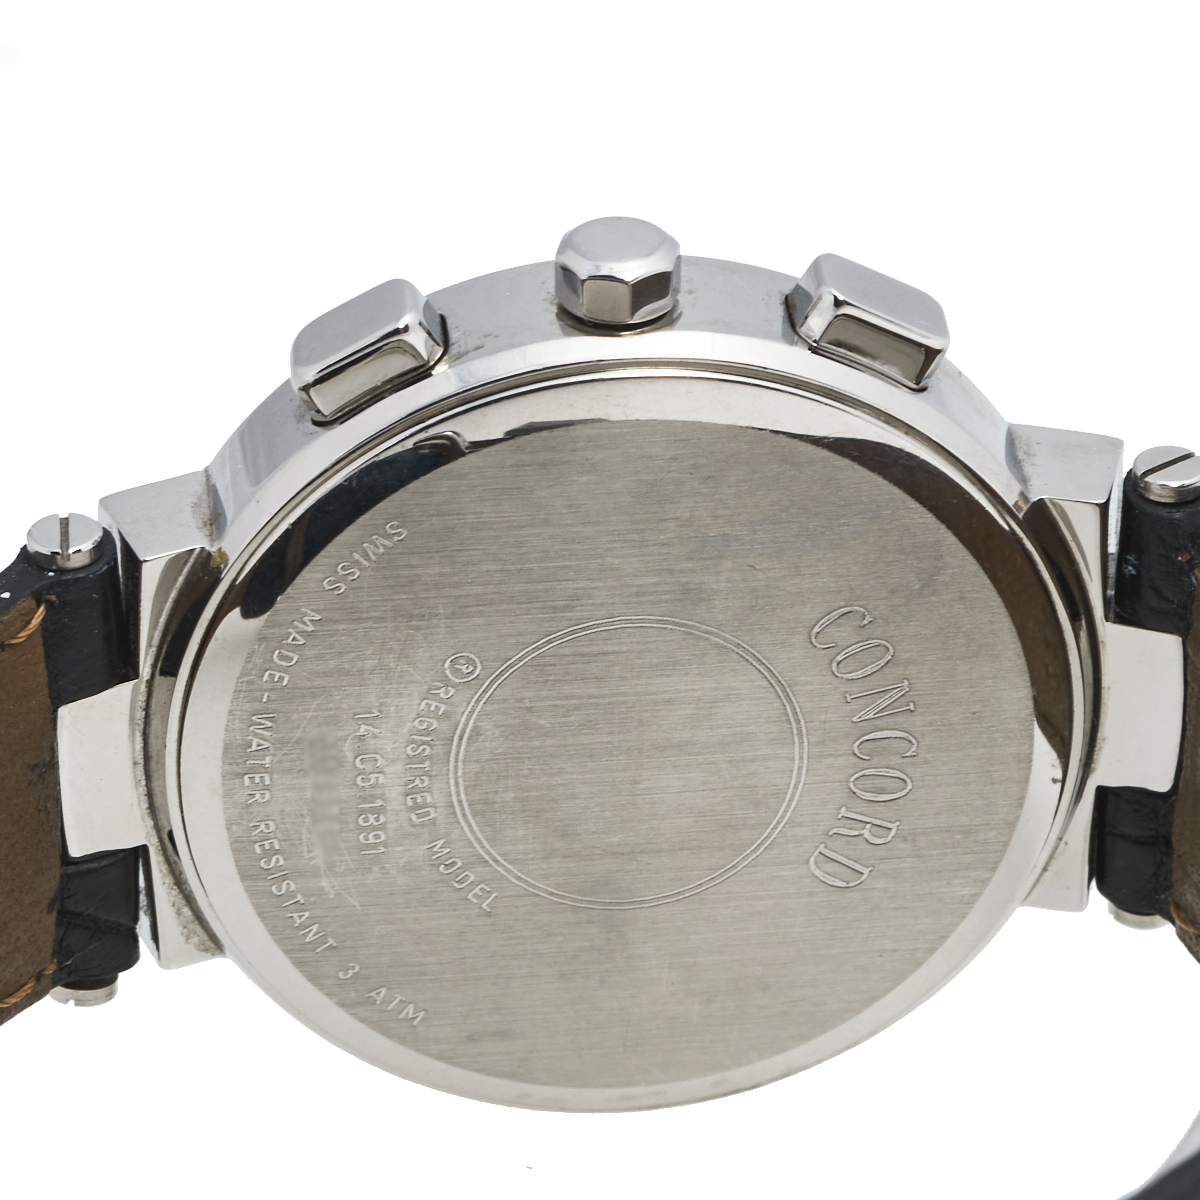 Concord Grey Stainless Steel Leather La Scala 14.C5.1891 Women's Wristwatch 38 Mm